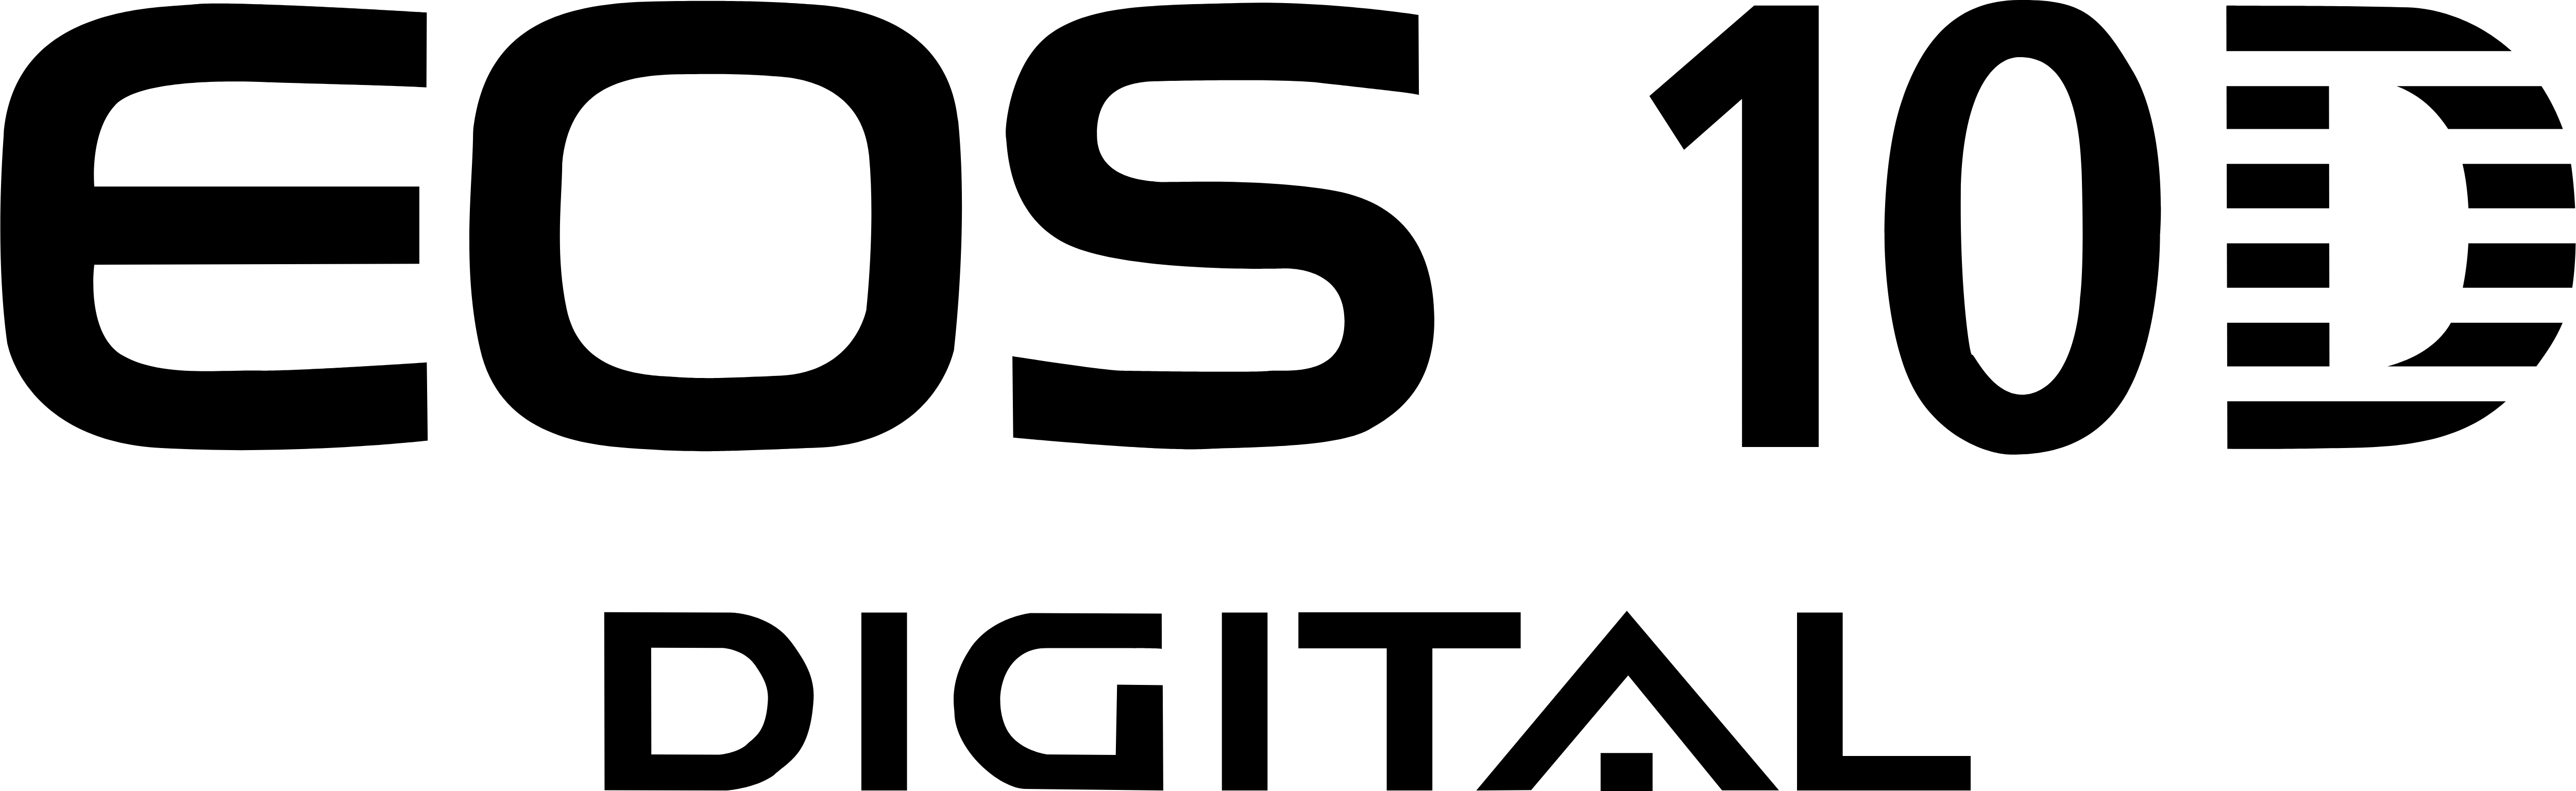 Canon Logo Transparent File